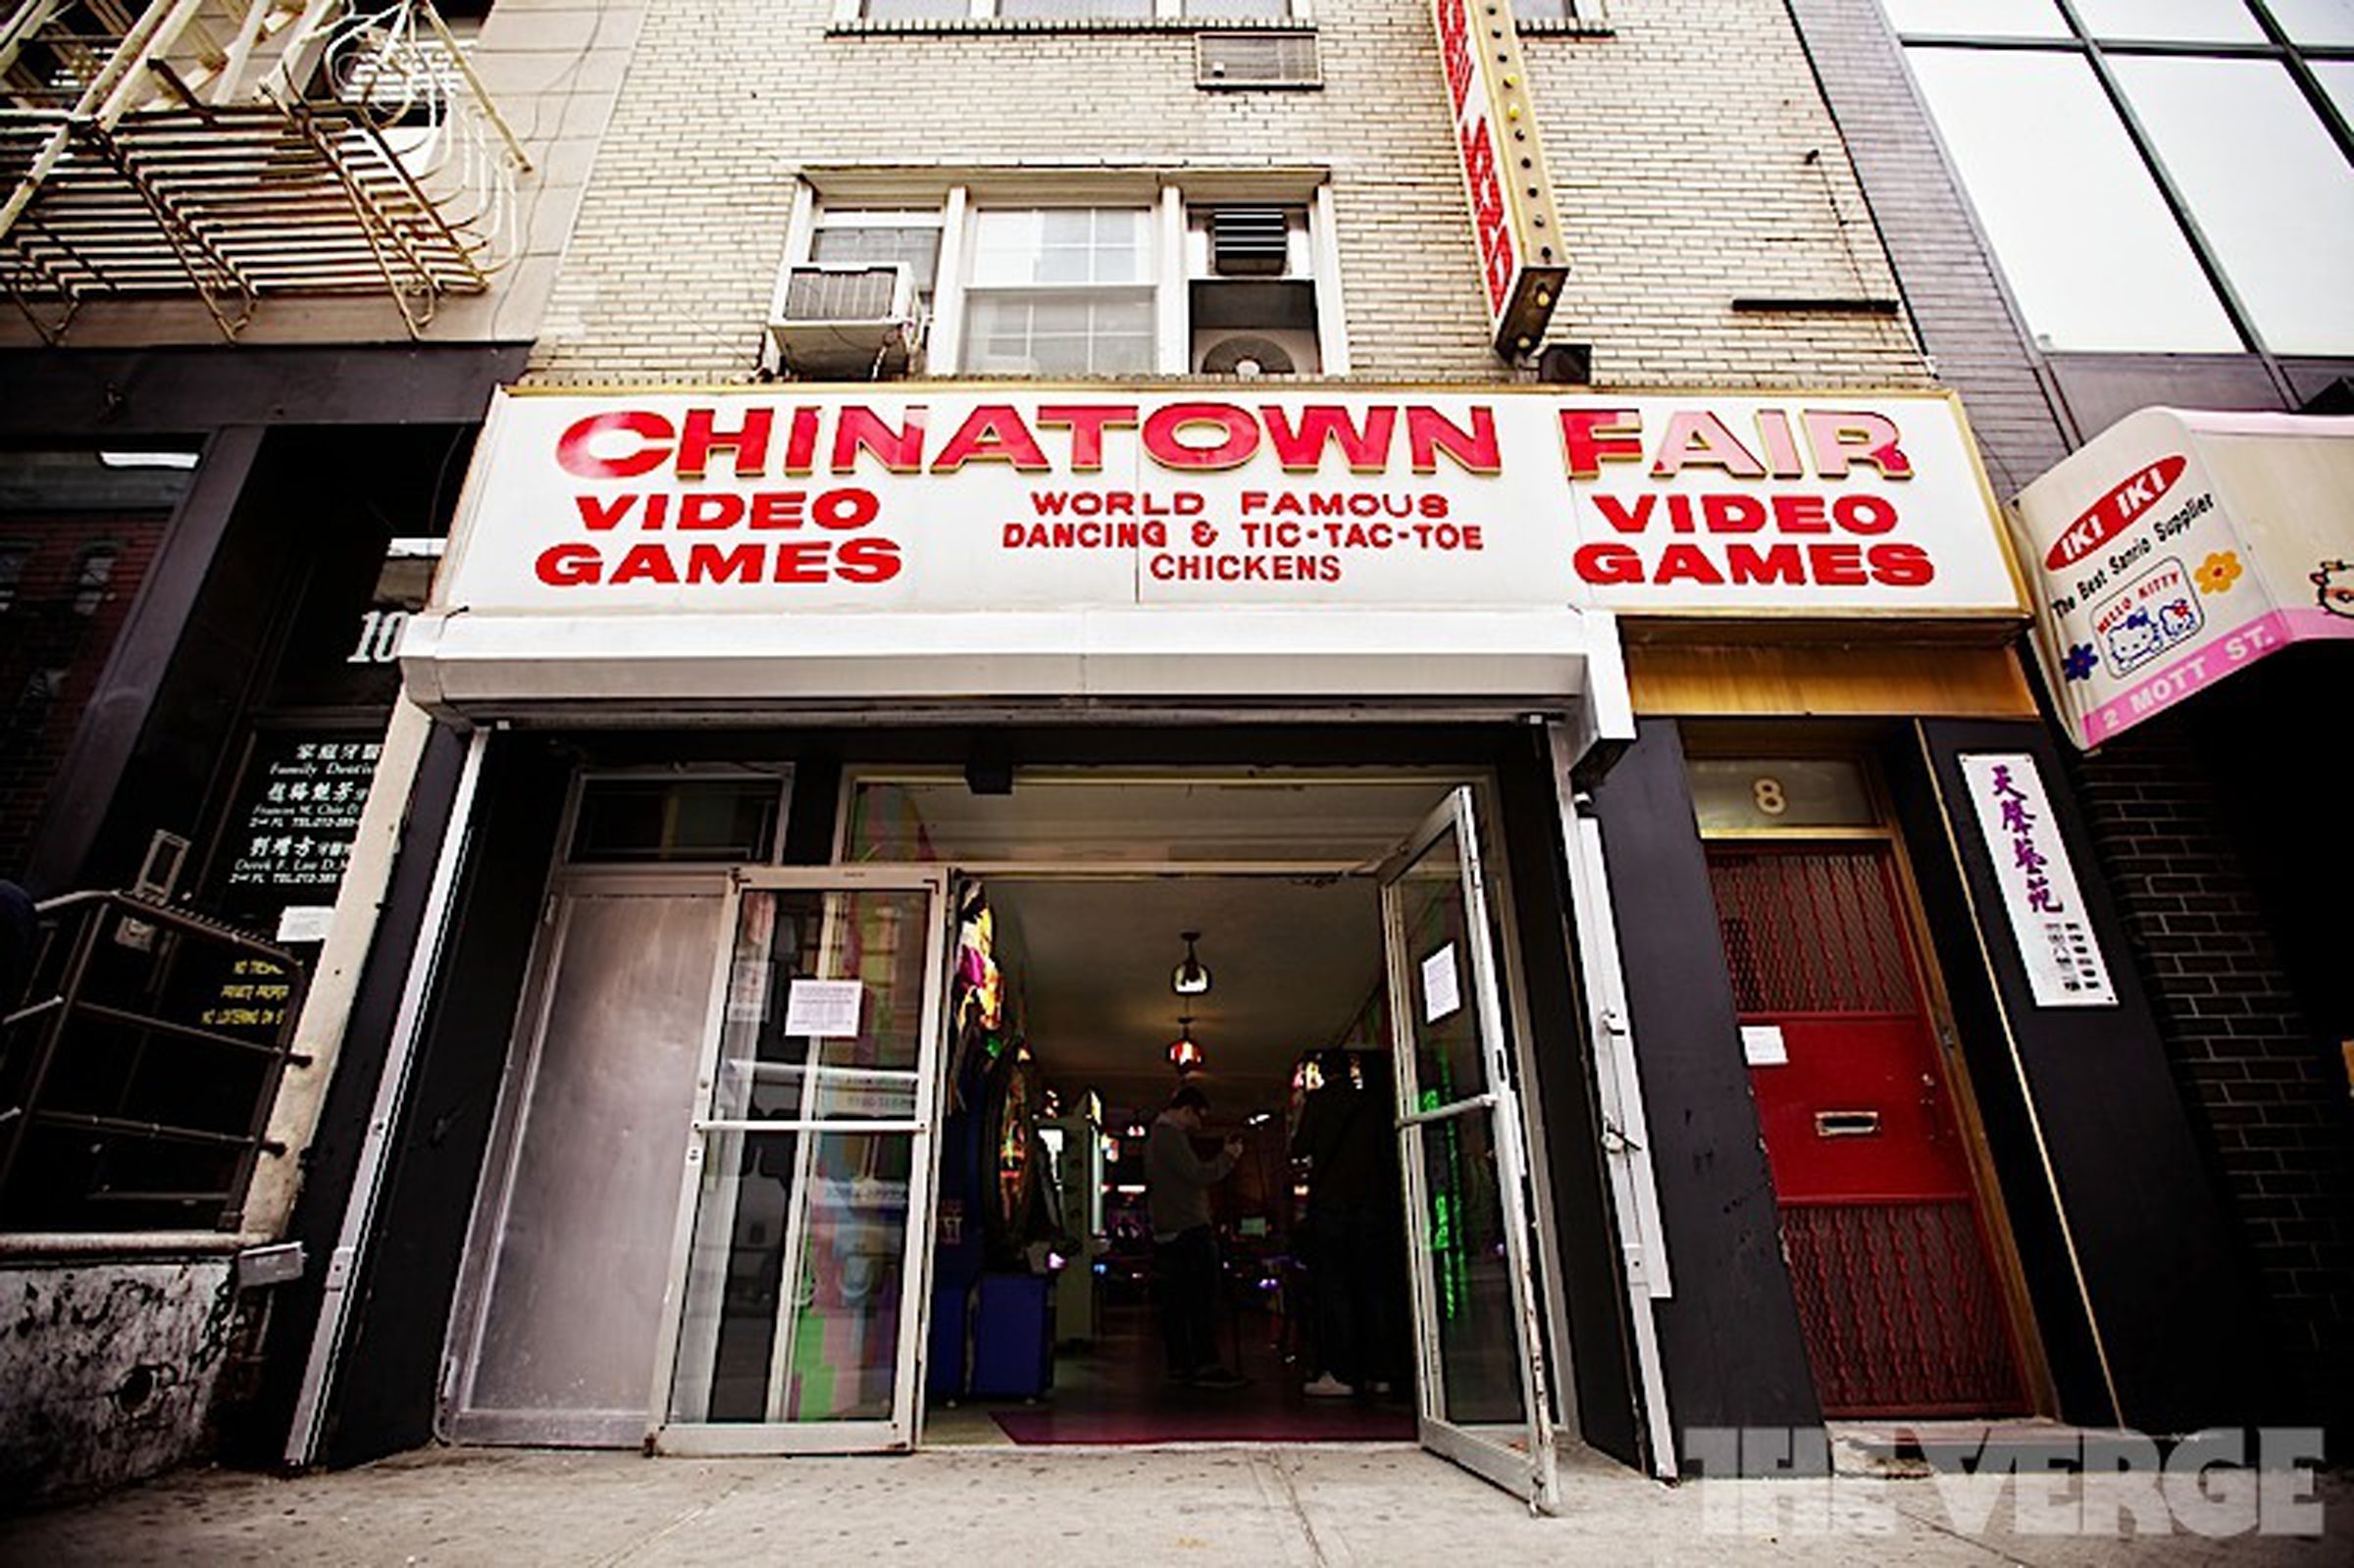 Chinatown Fair arcade's grand re-opening